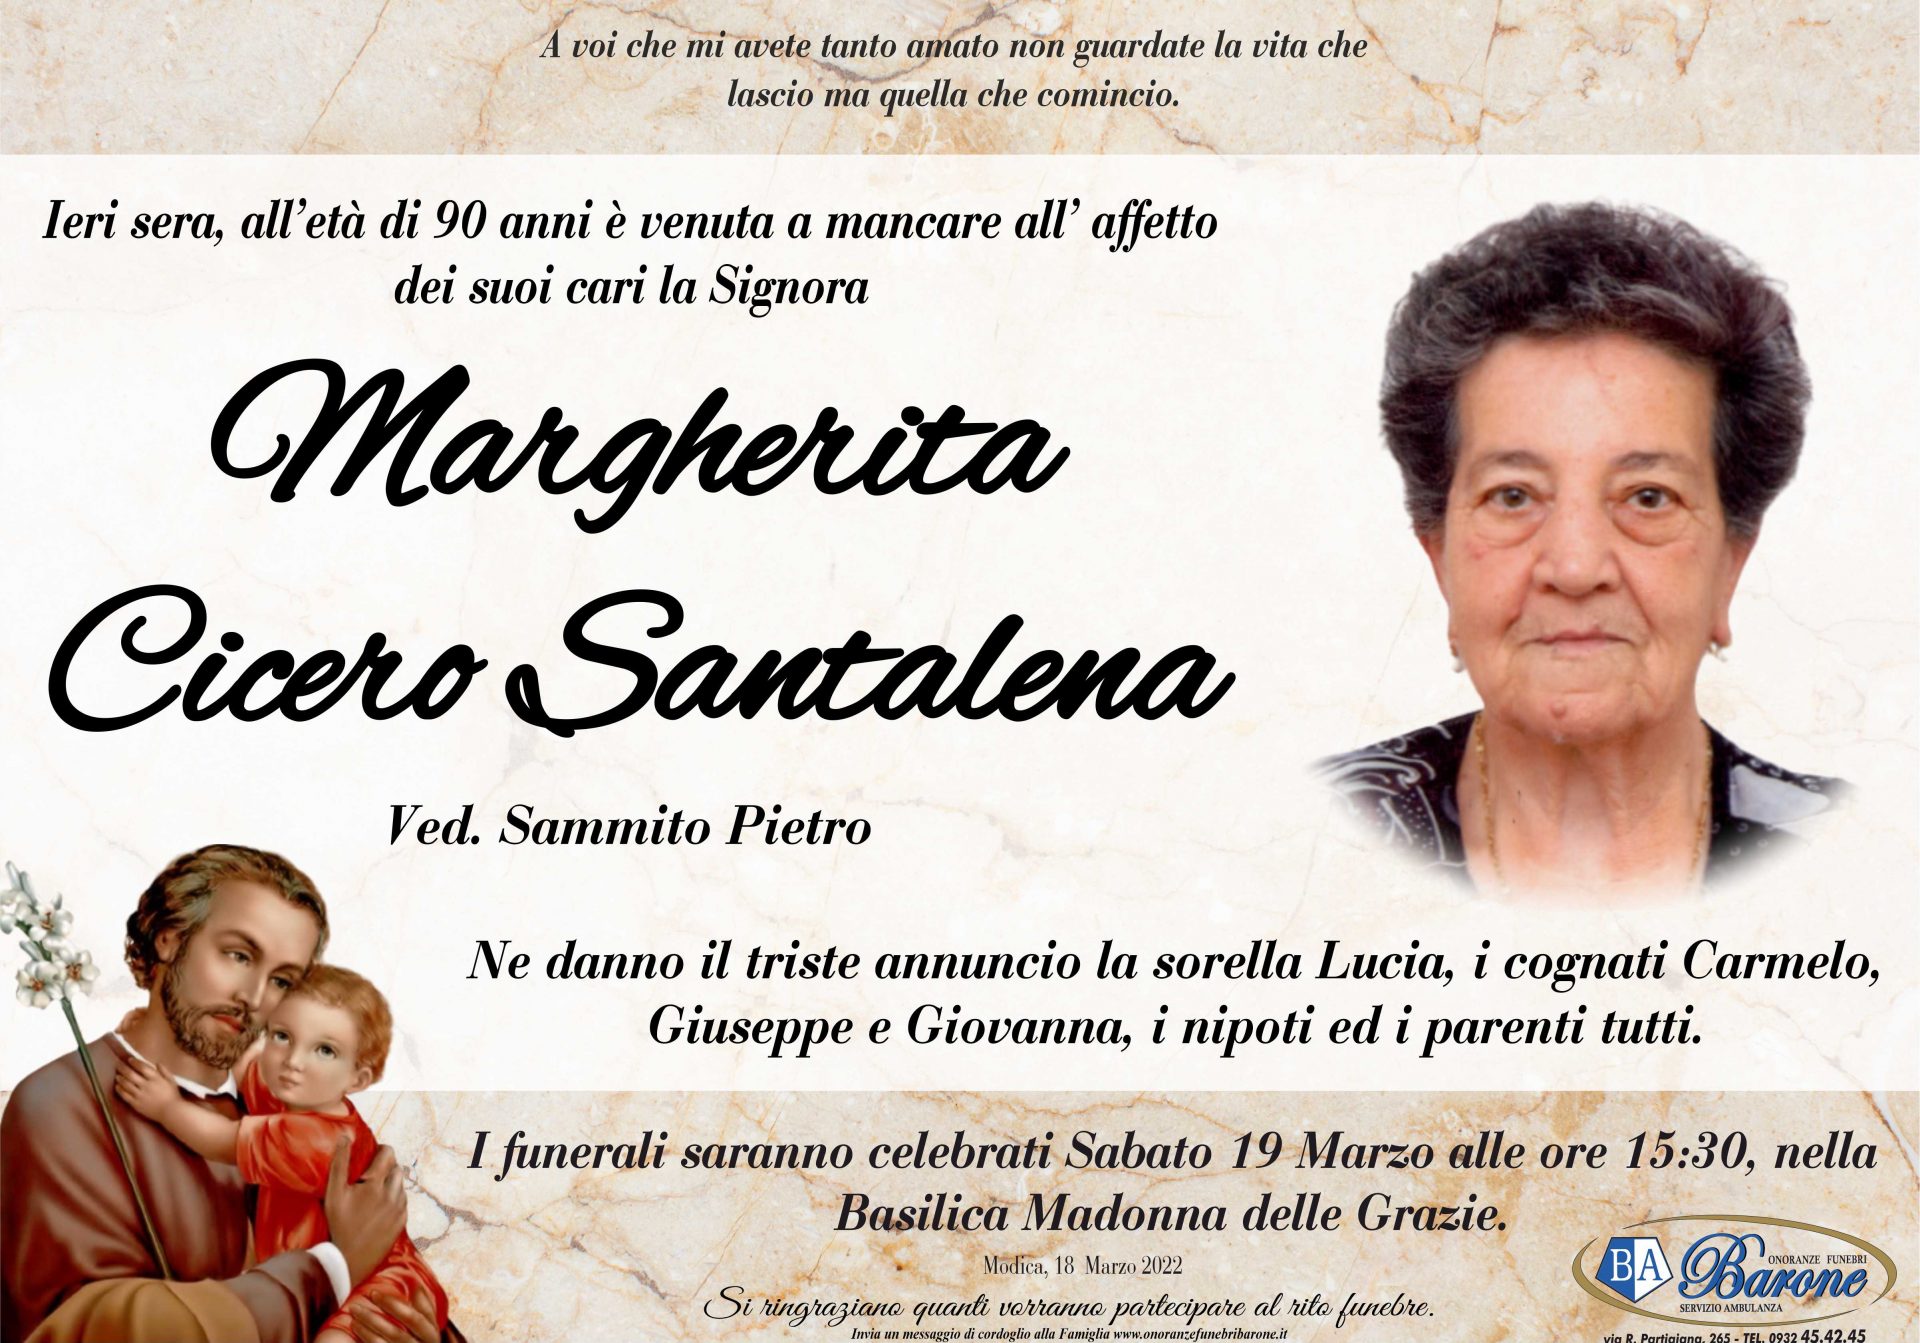 Margherita Cicero Santalena